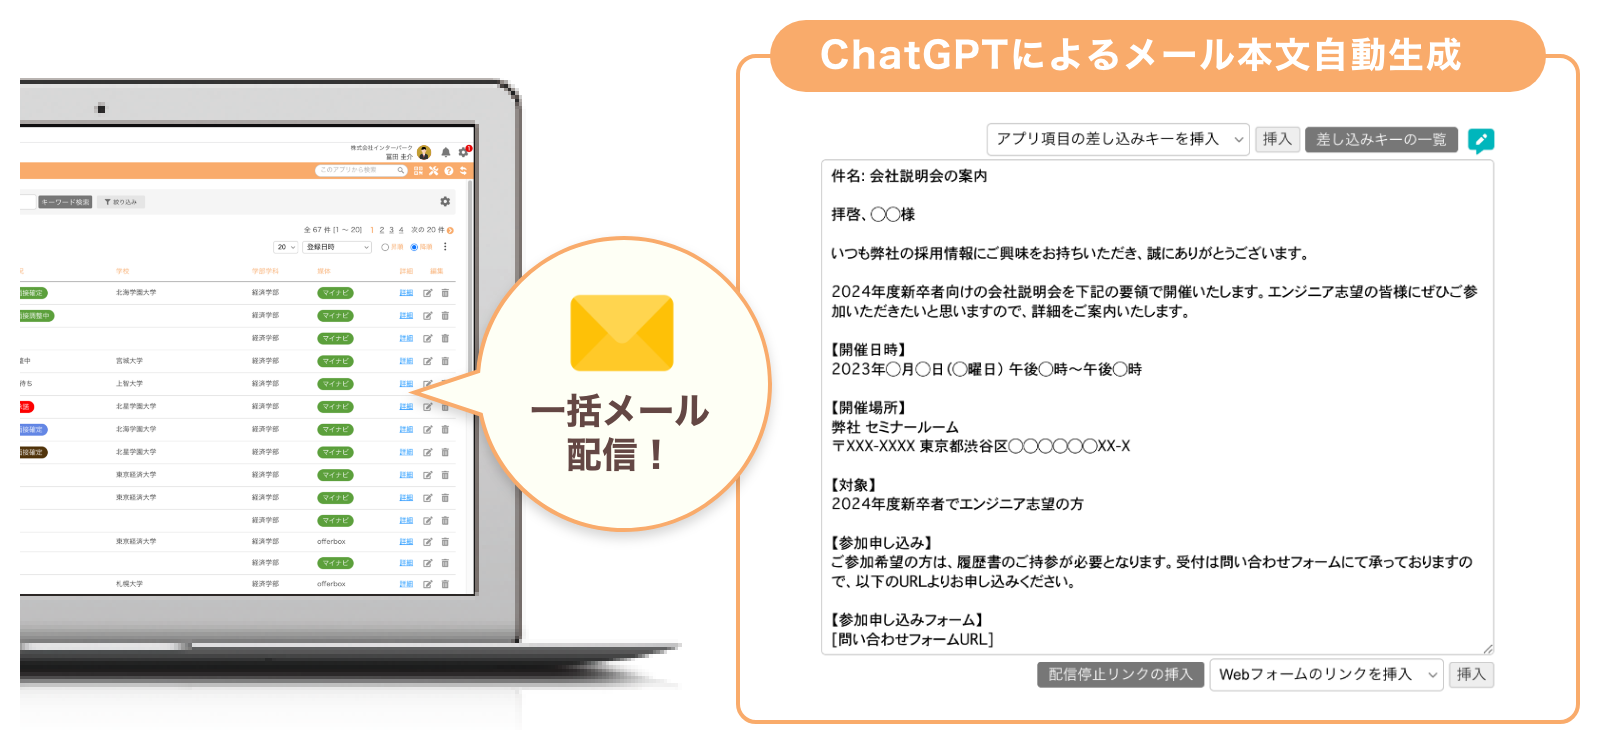 ChatGPTイメージ図